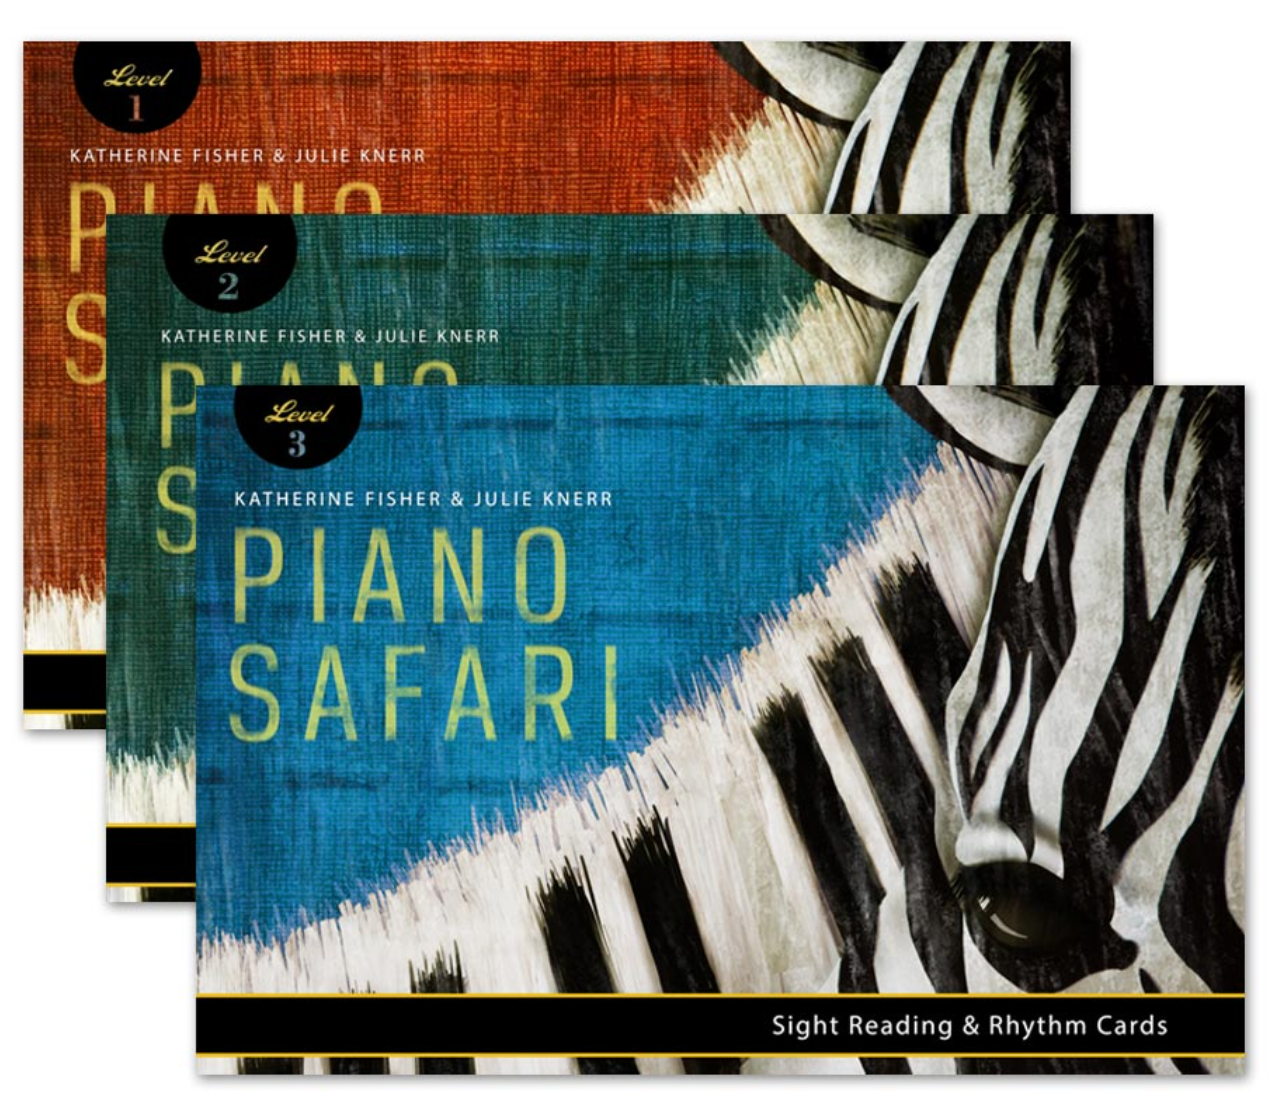 Piano Safari Sight Reading Card Pack - Fisher Katherine; Hague Julie Knerr Piano Safari PNSF1015